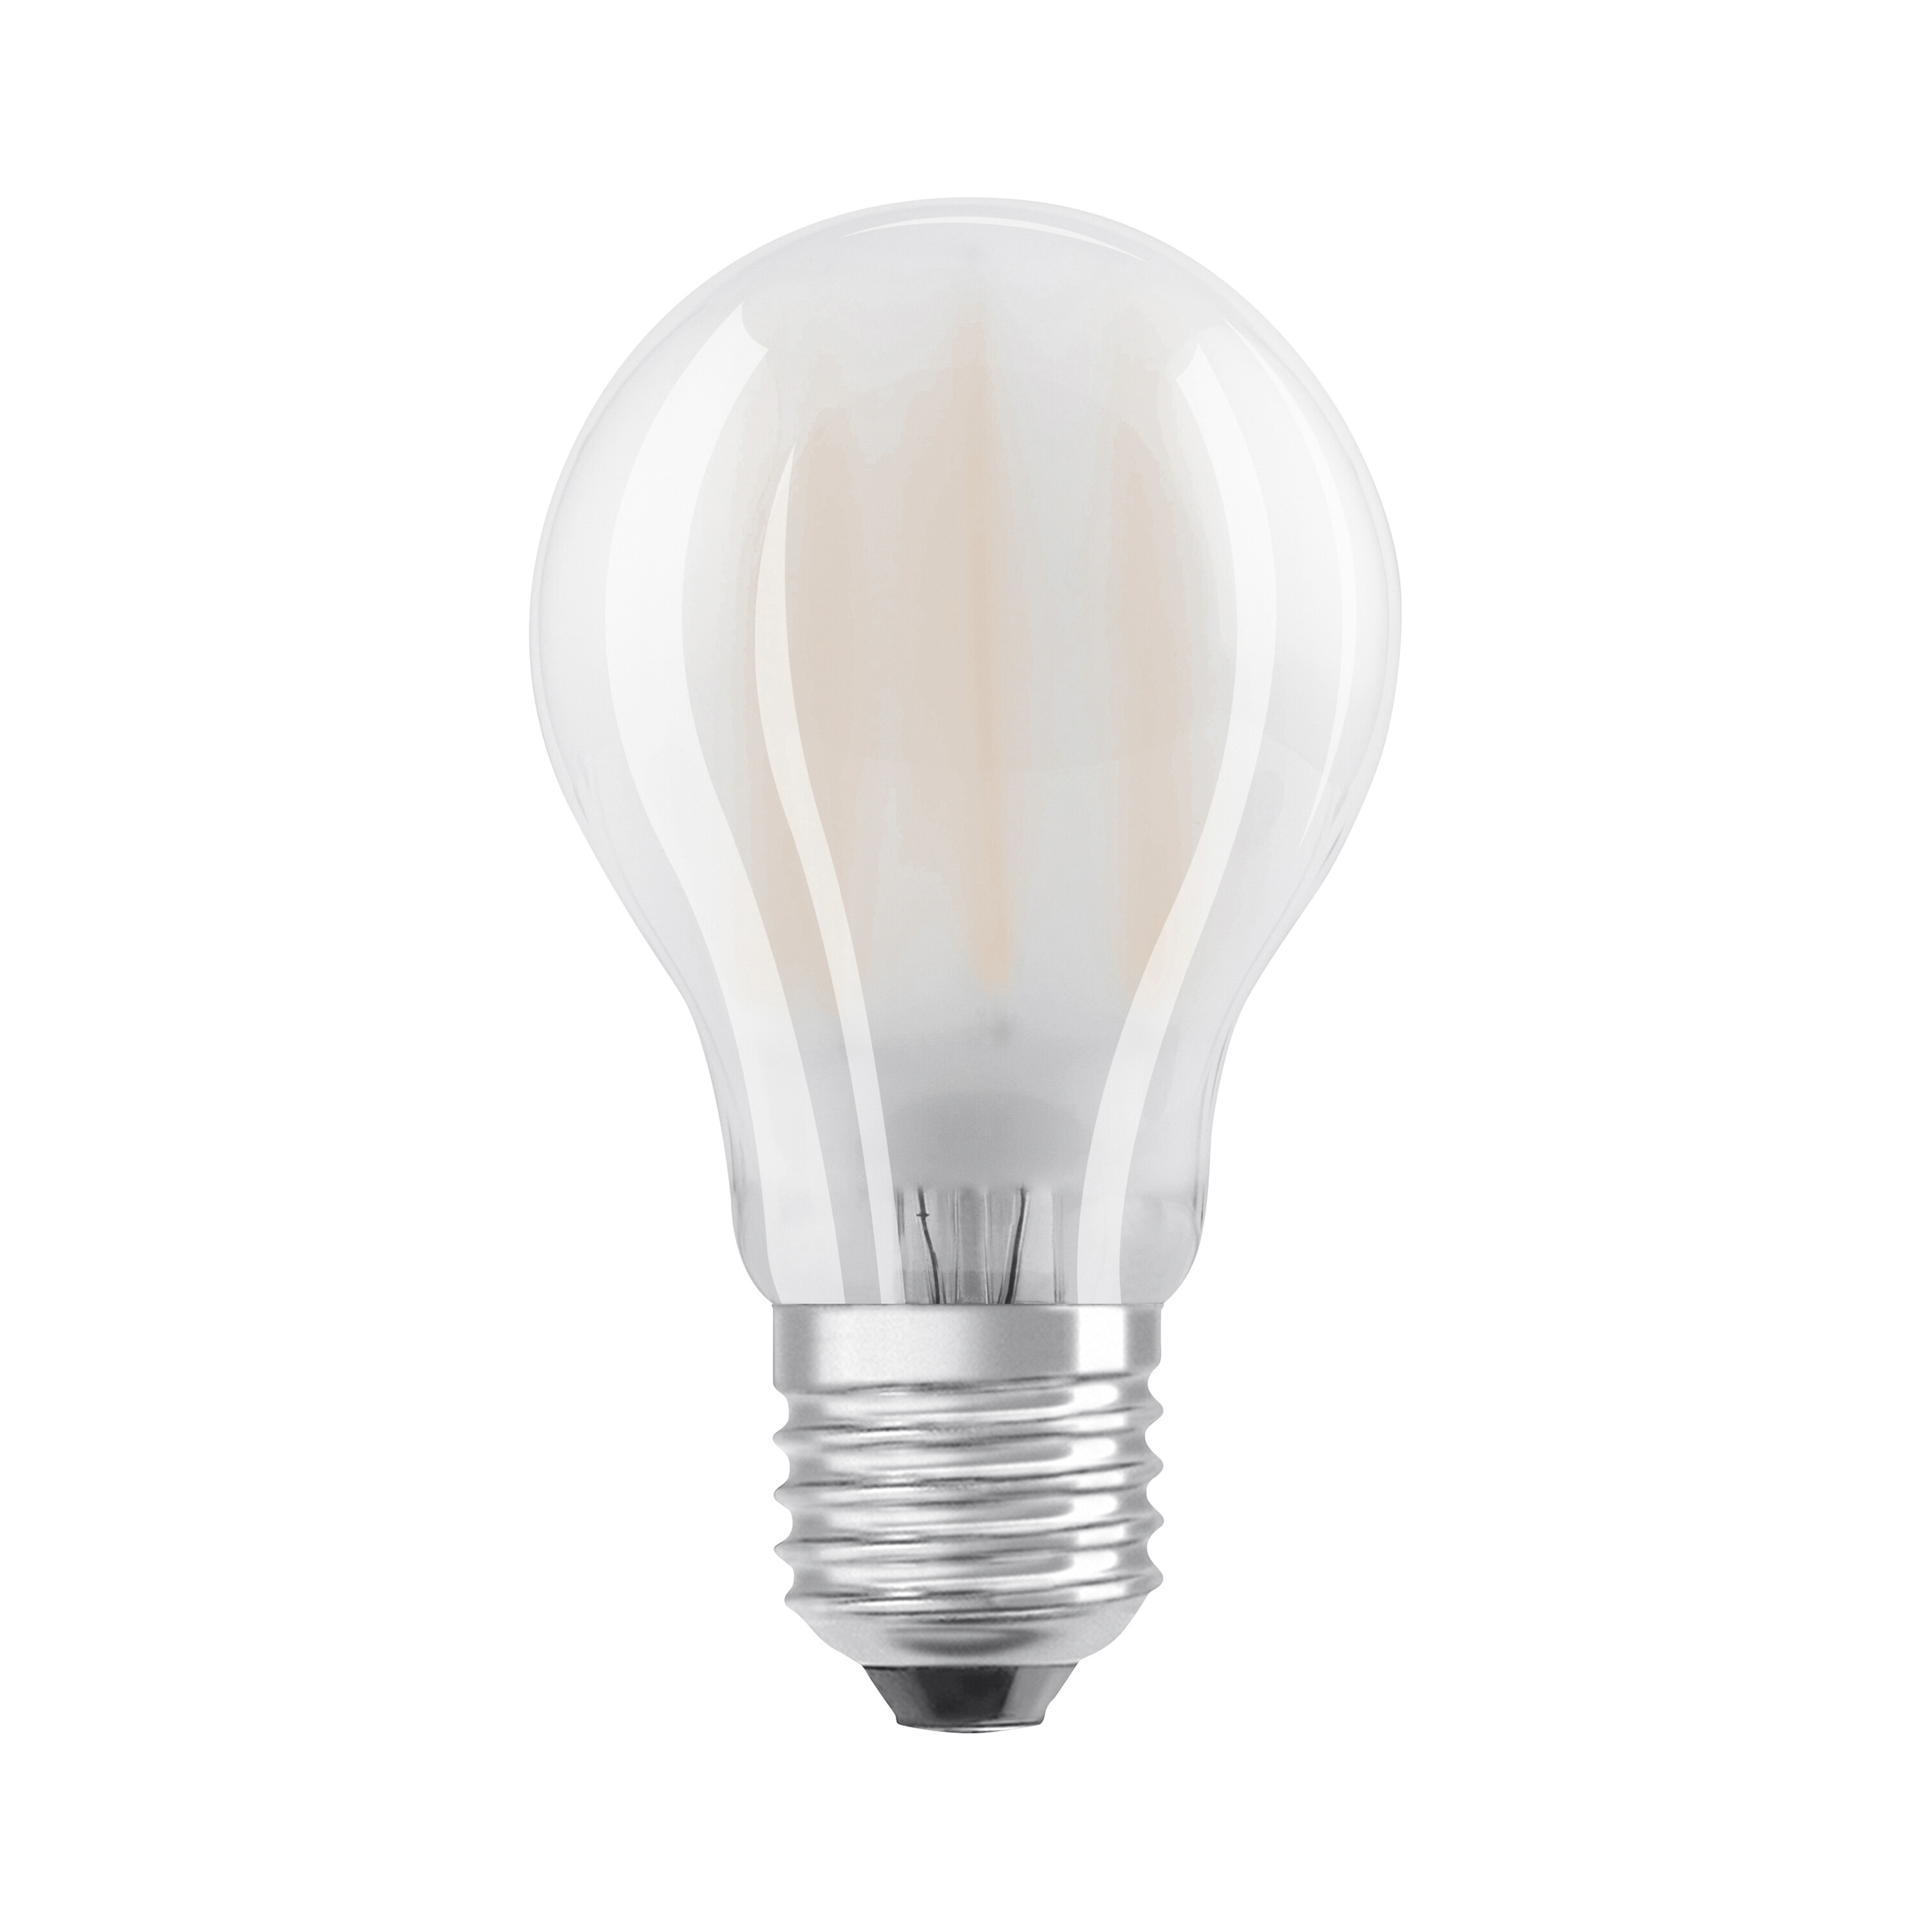 Classic Filament Lumen Warmweiß Dimmable LED Lampe SMART+ 1055 LEDVANCE